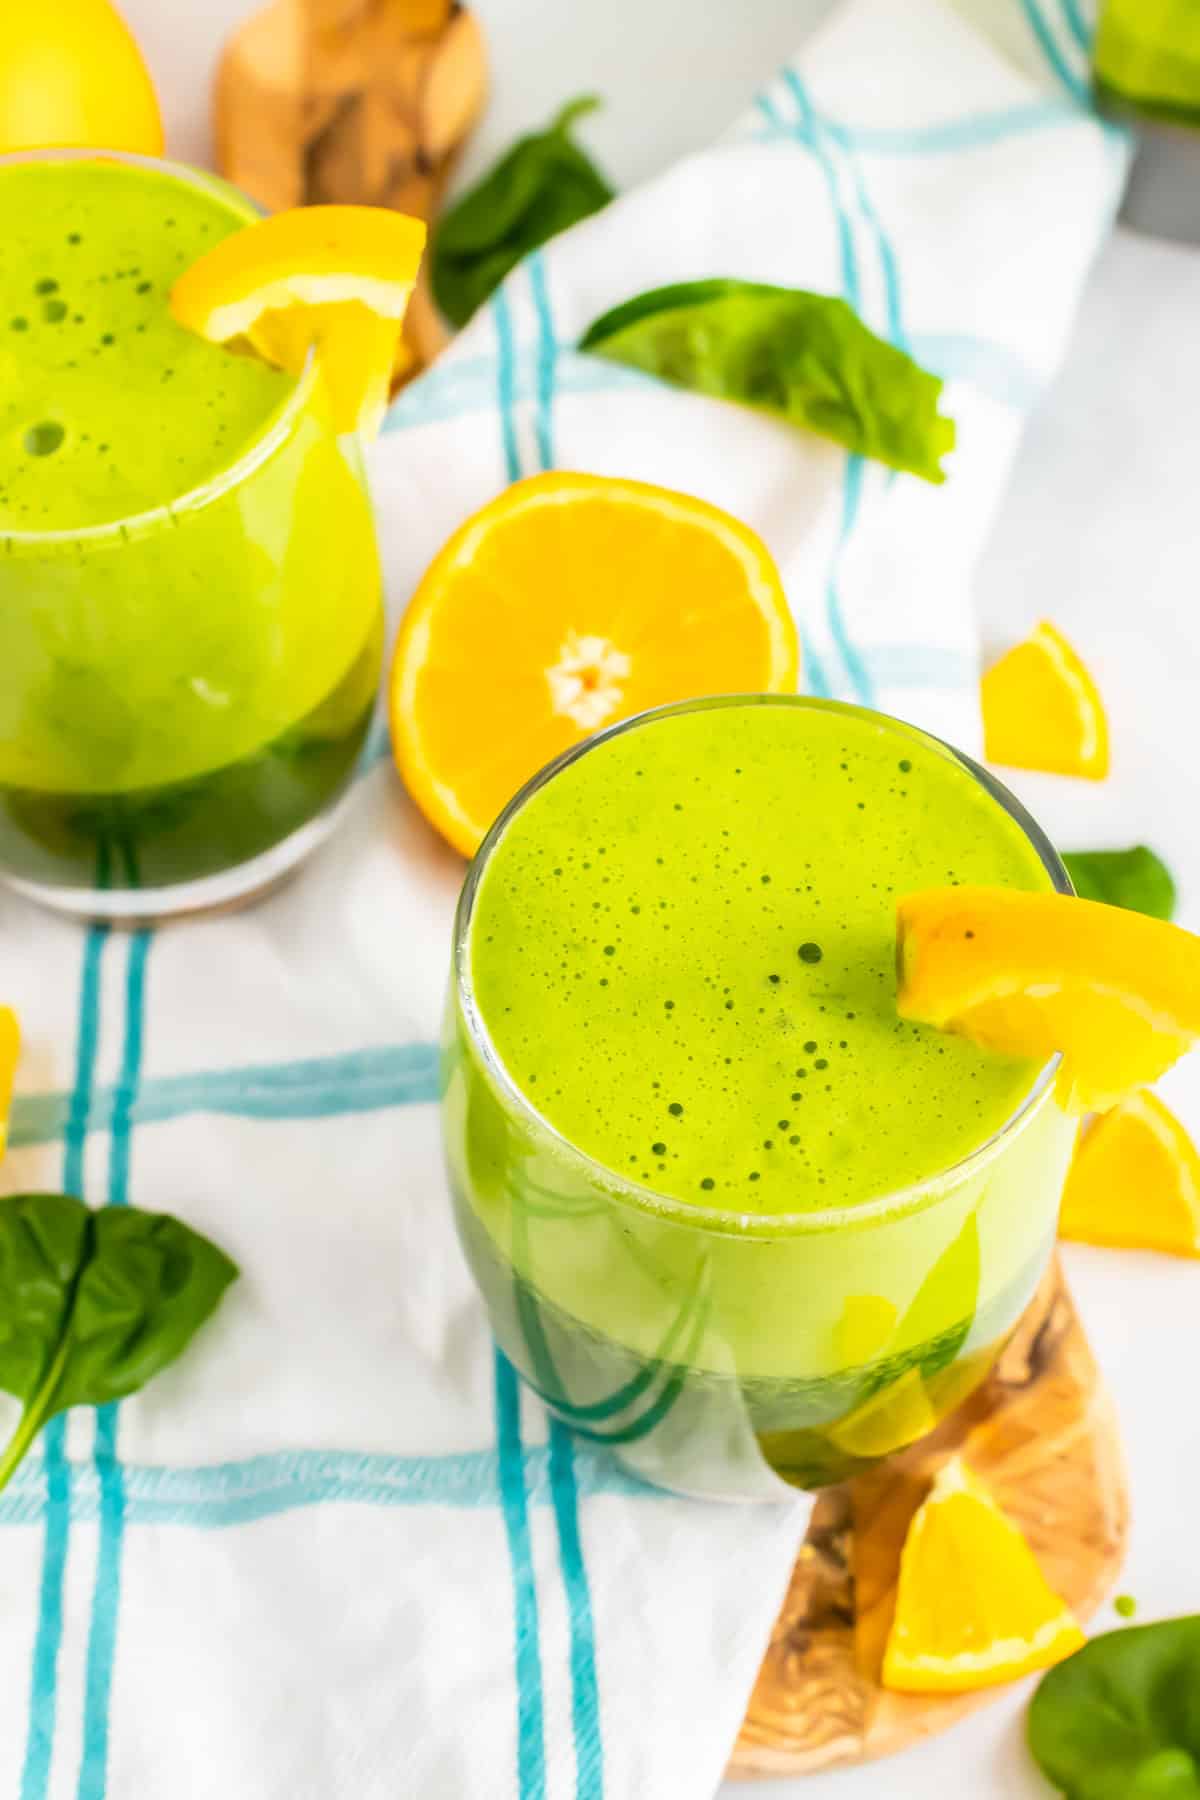 Green juice in glasses with orange slices.